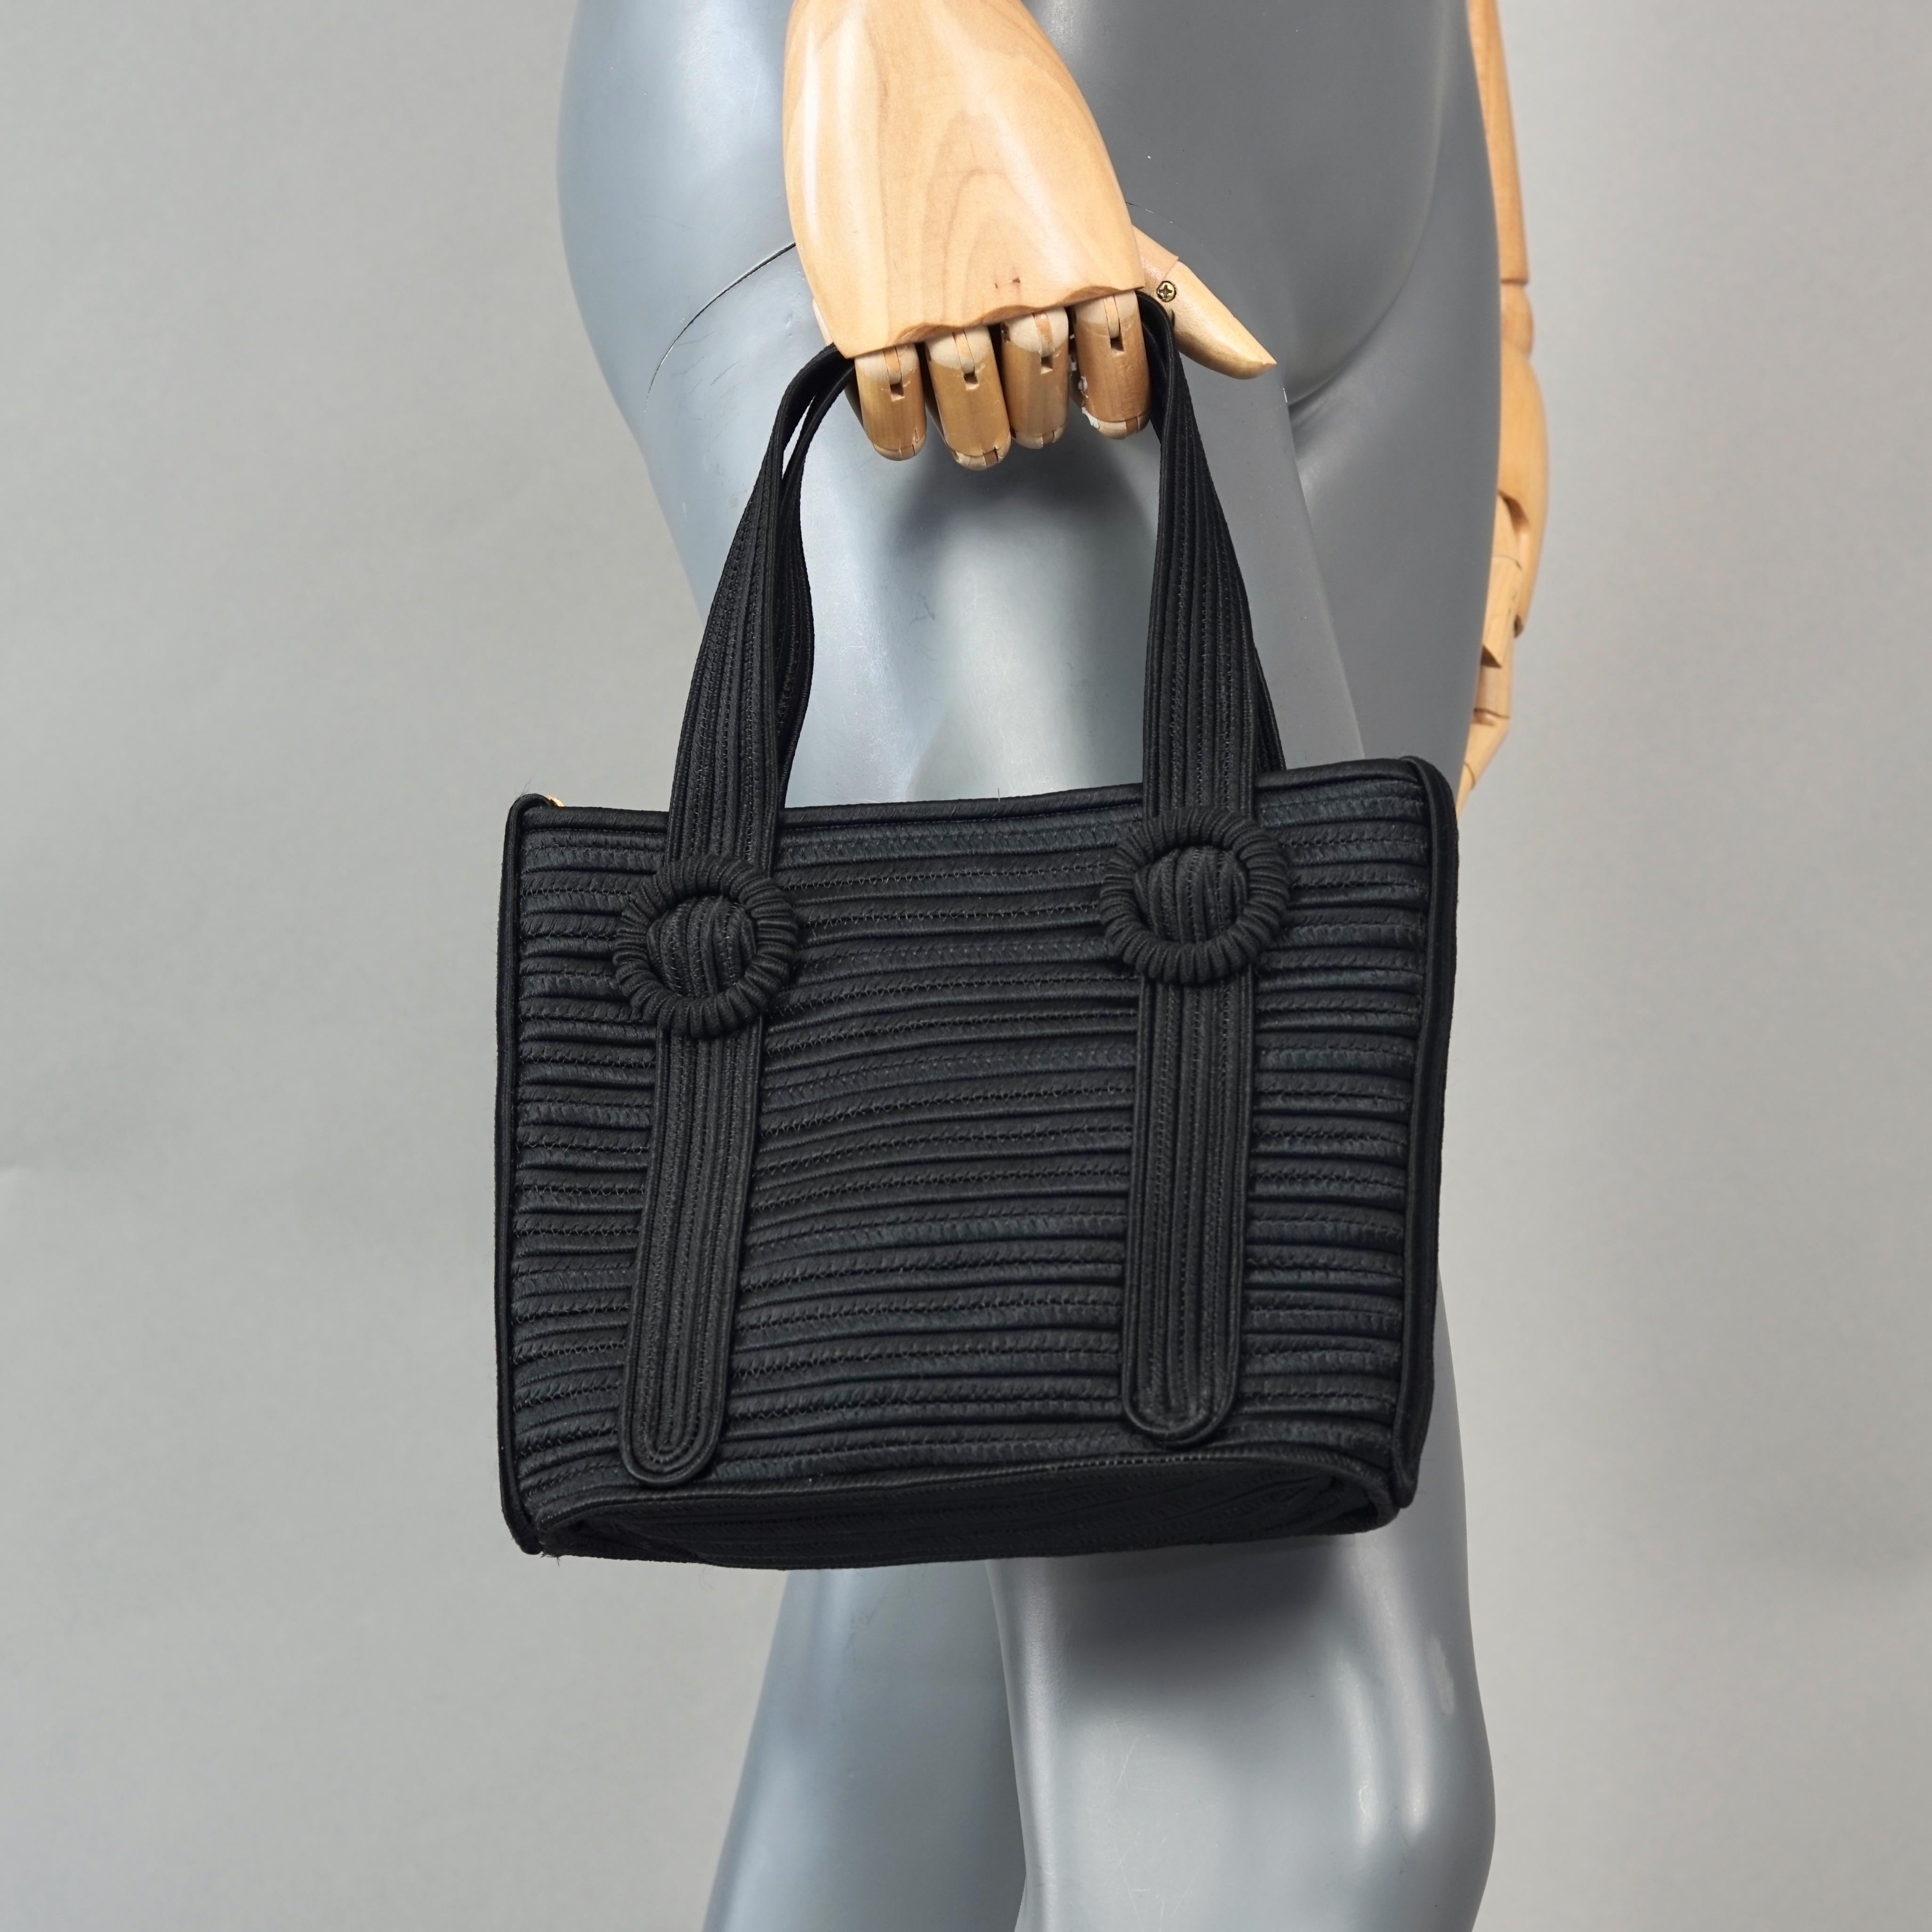 Vintage YVES SAINT LAURENT Ysl Black Passementerie  Hand Bag

Measurements:
Height: 6.89 inches (17.5 cm) without the handles
Width: 8.66 inches (22 cm)
Depth: 2.75 inches (7 cm)
Handles: 11.81 inches  (30 cm)

Features:
- 100% Authentic YVES SAINT